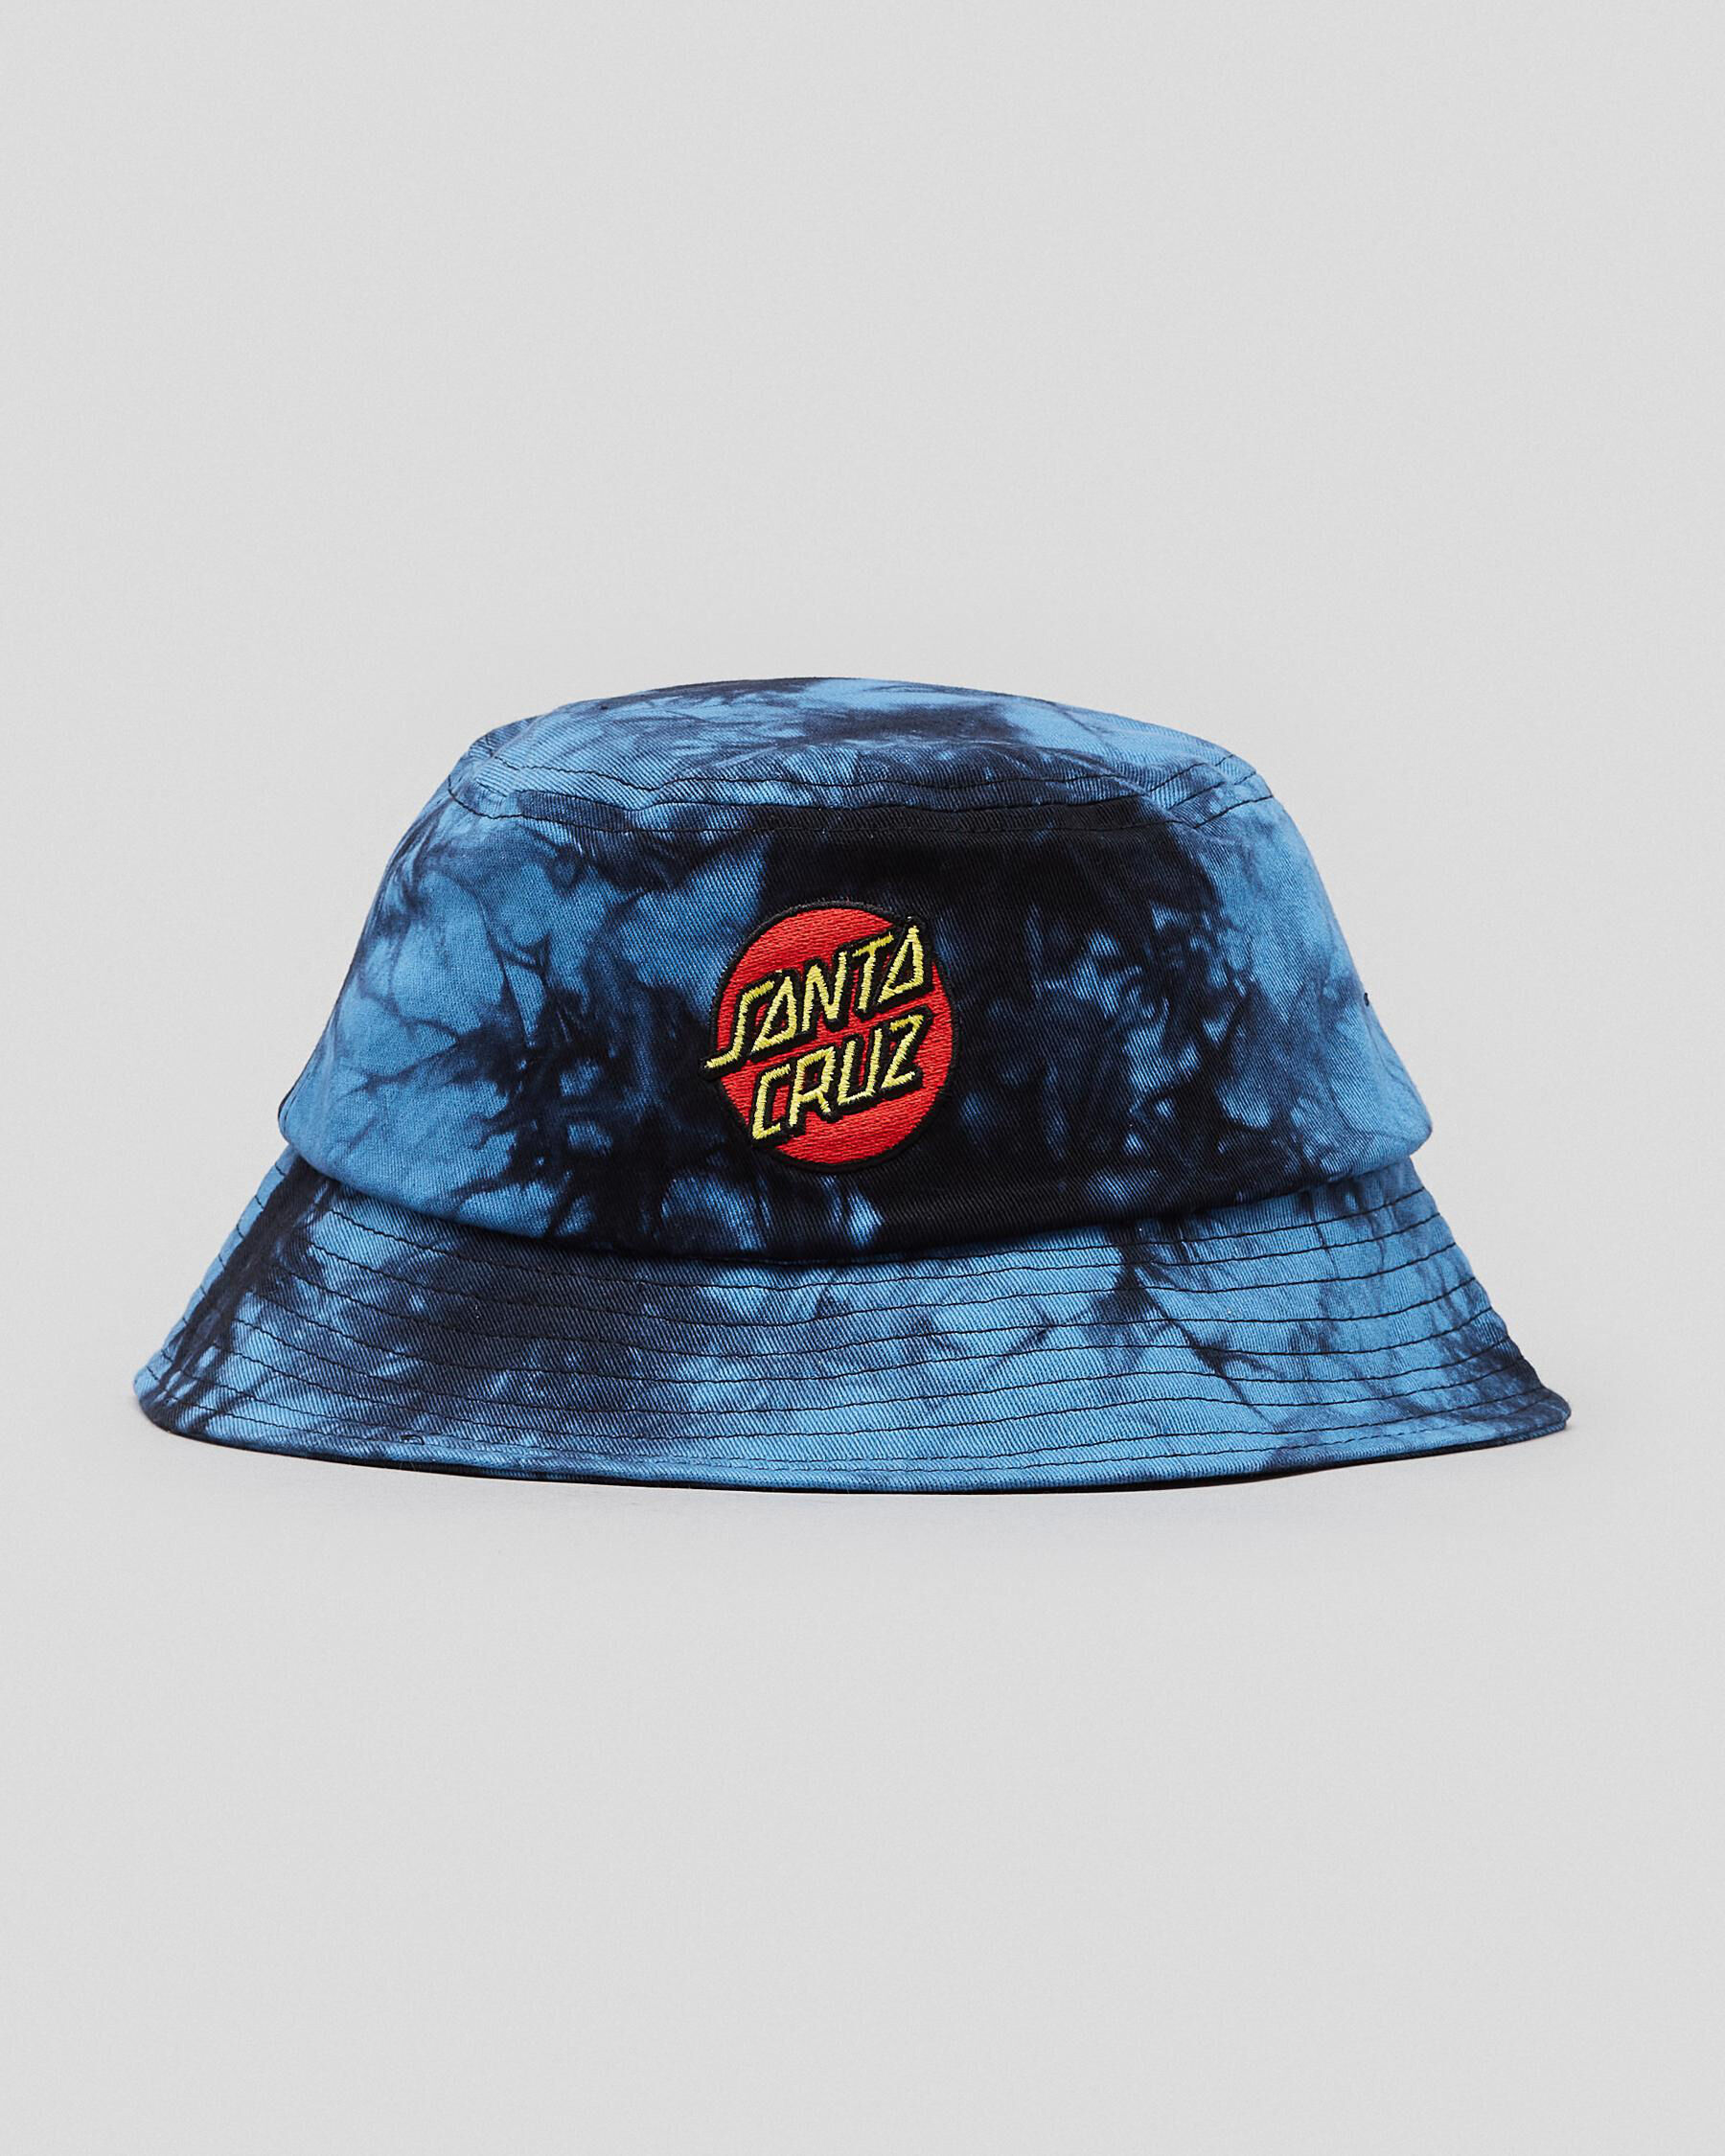 Kids Bucket Hats | City Beach United States | Free Shipping